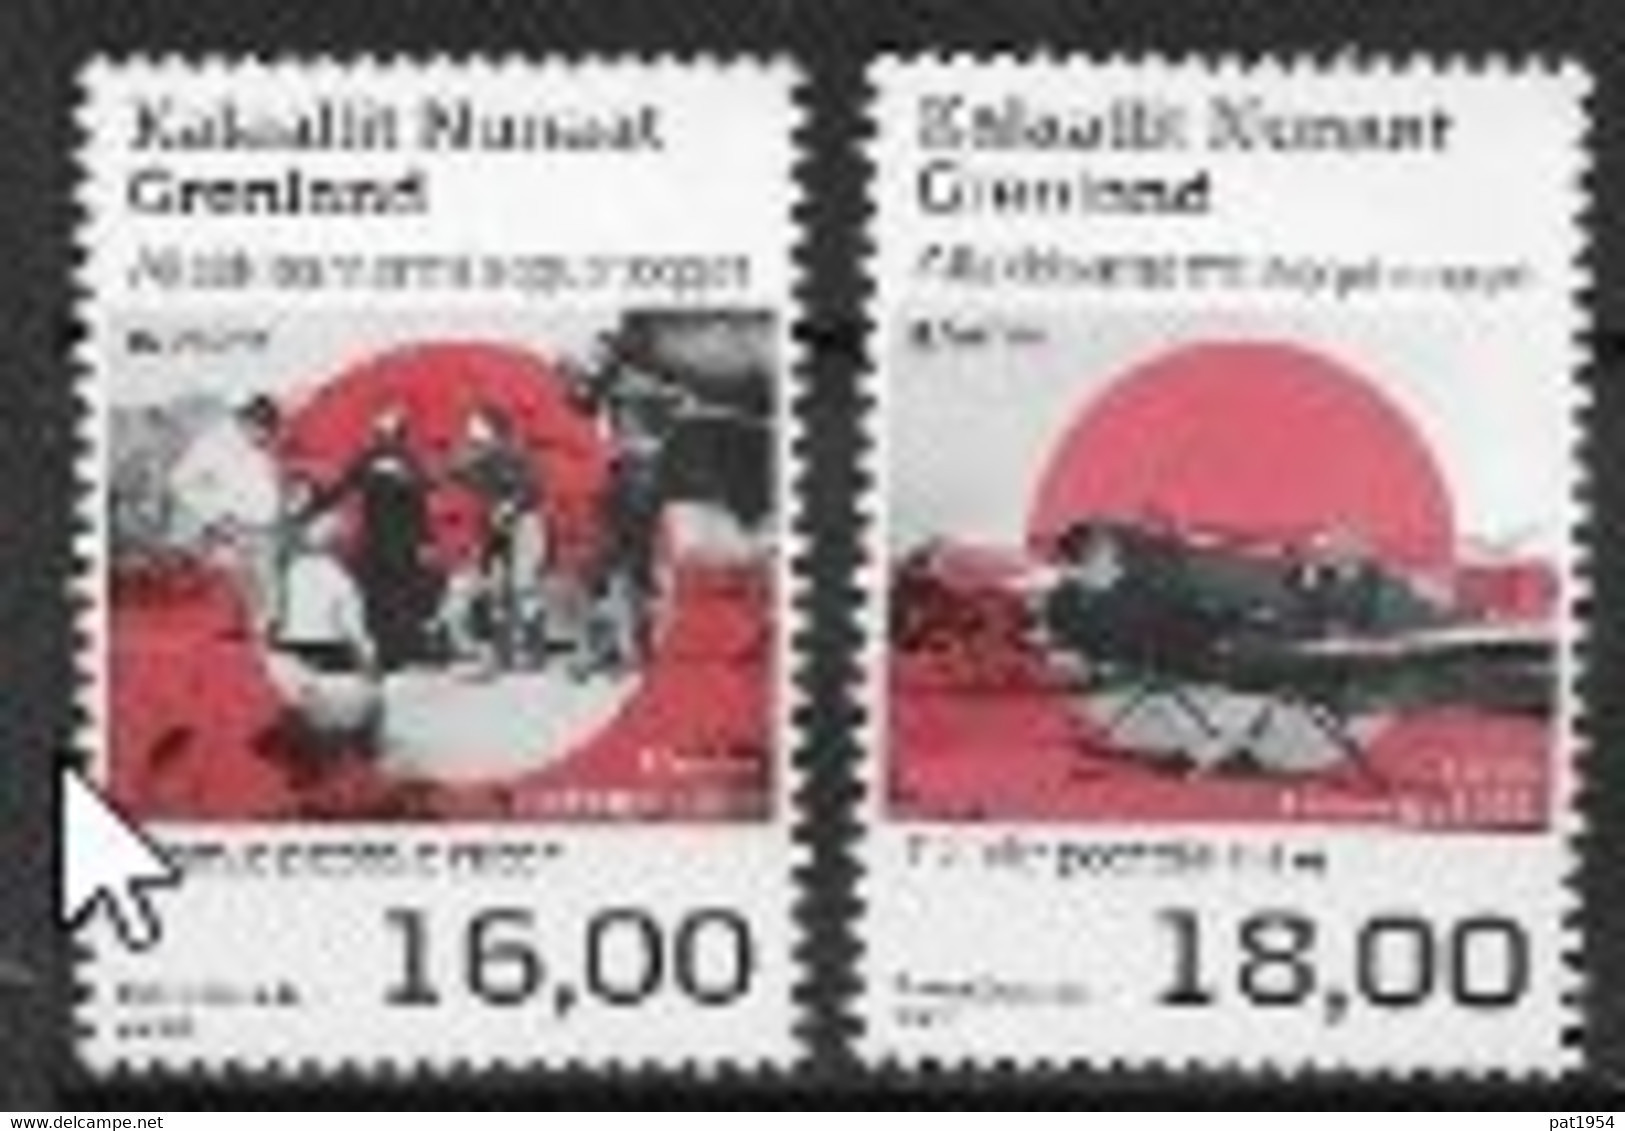 Groënland 2020, Série Neuve Europa Routes Postales - Ungebraucht